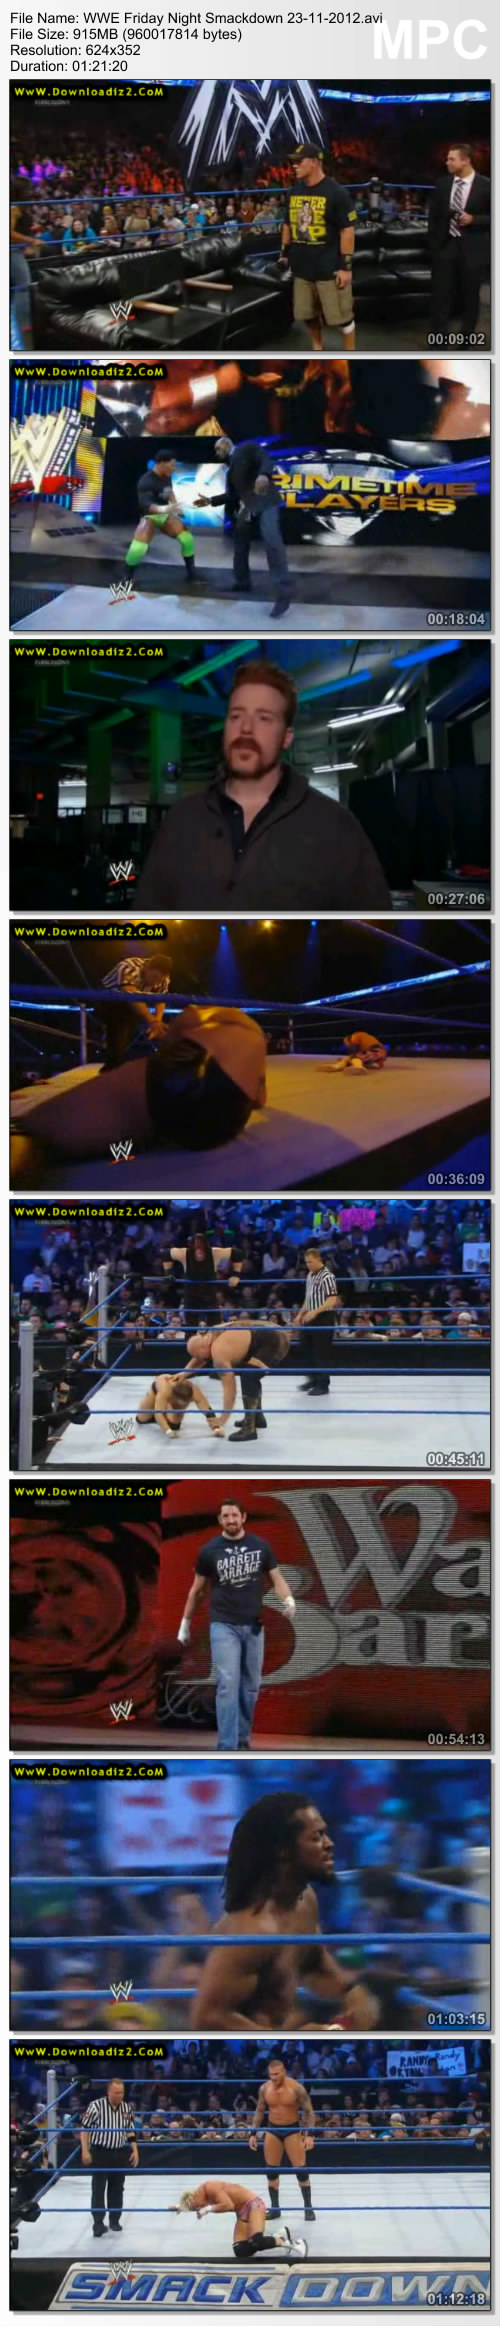  SmackDown 23.11.2012  121124131313UpwK.jpg